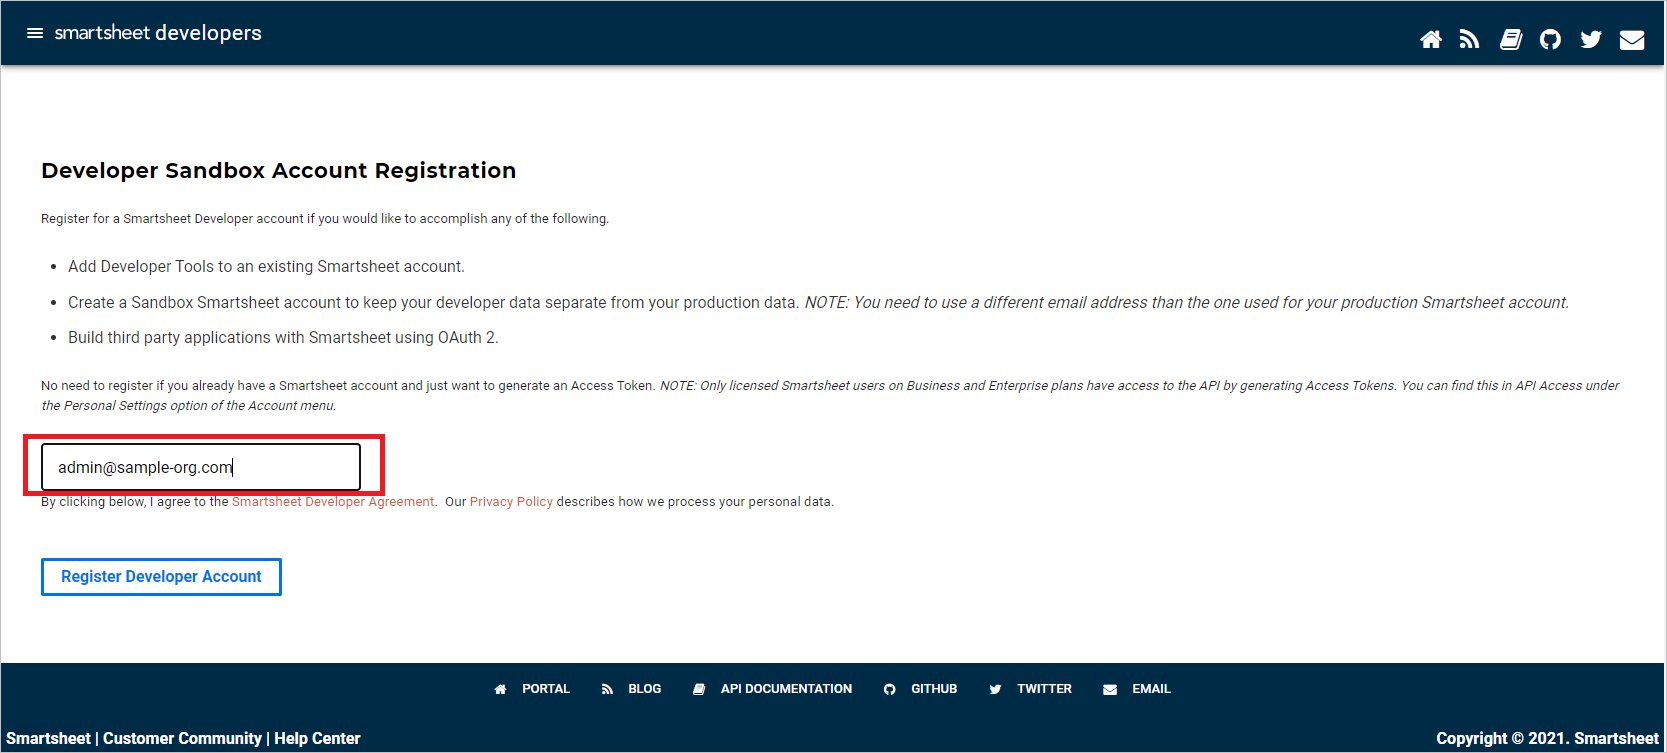 Screenshot that shows the Developer Sandbox Account Registration page.